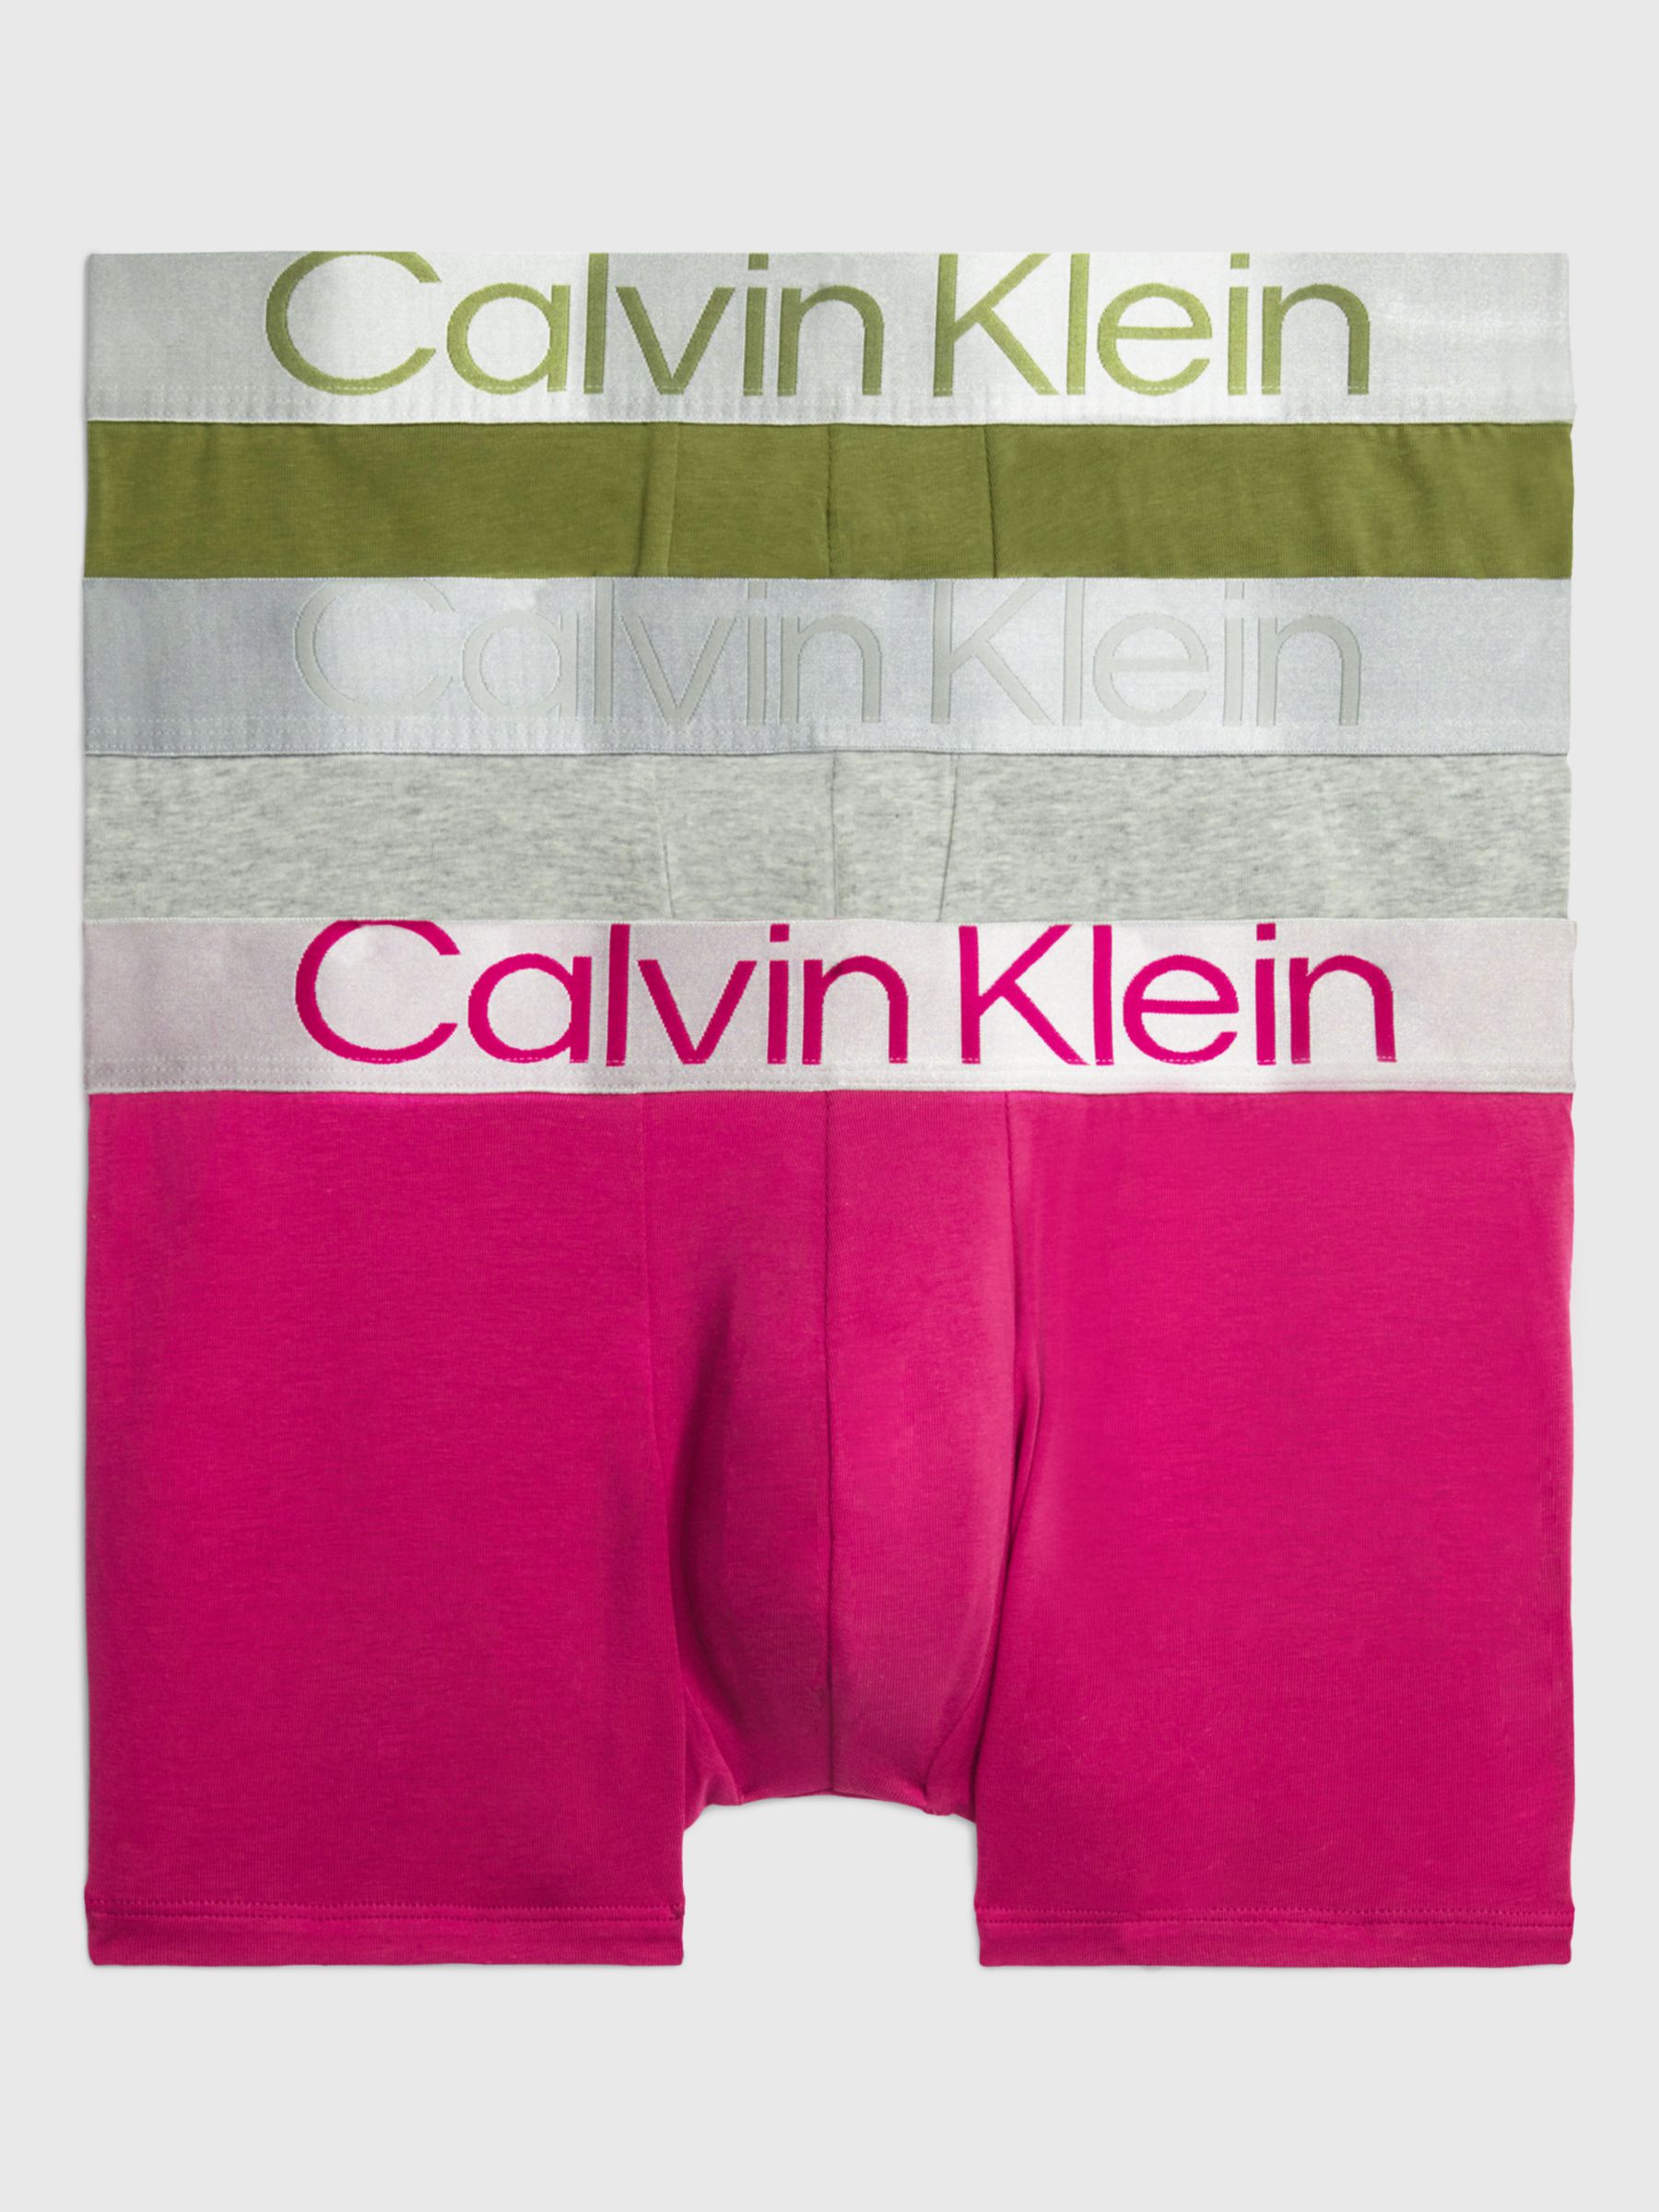 Calvin Klein Steel Cotton Trunks, Pack of 3, Multi, L